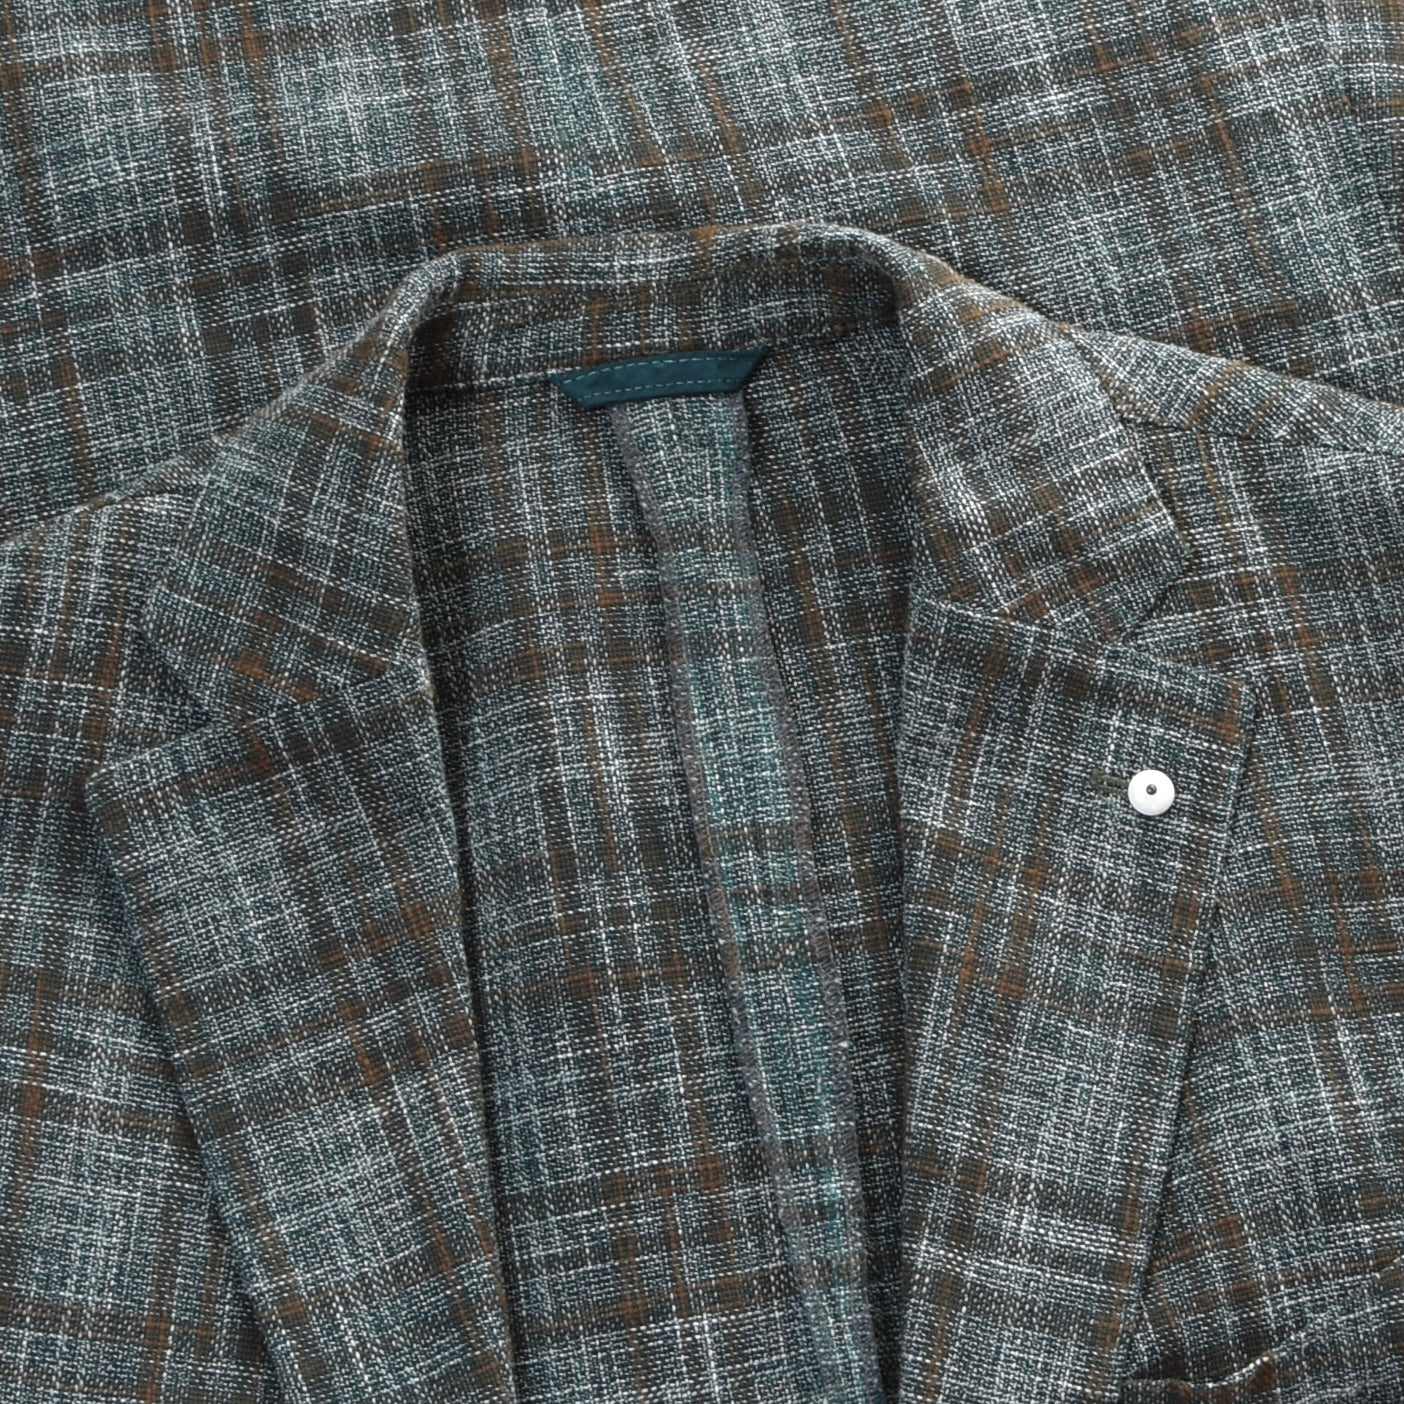 LBM 1911 Wool-Cotton Jacket Size 50 - Plaid